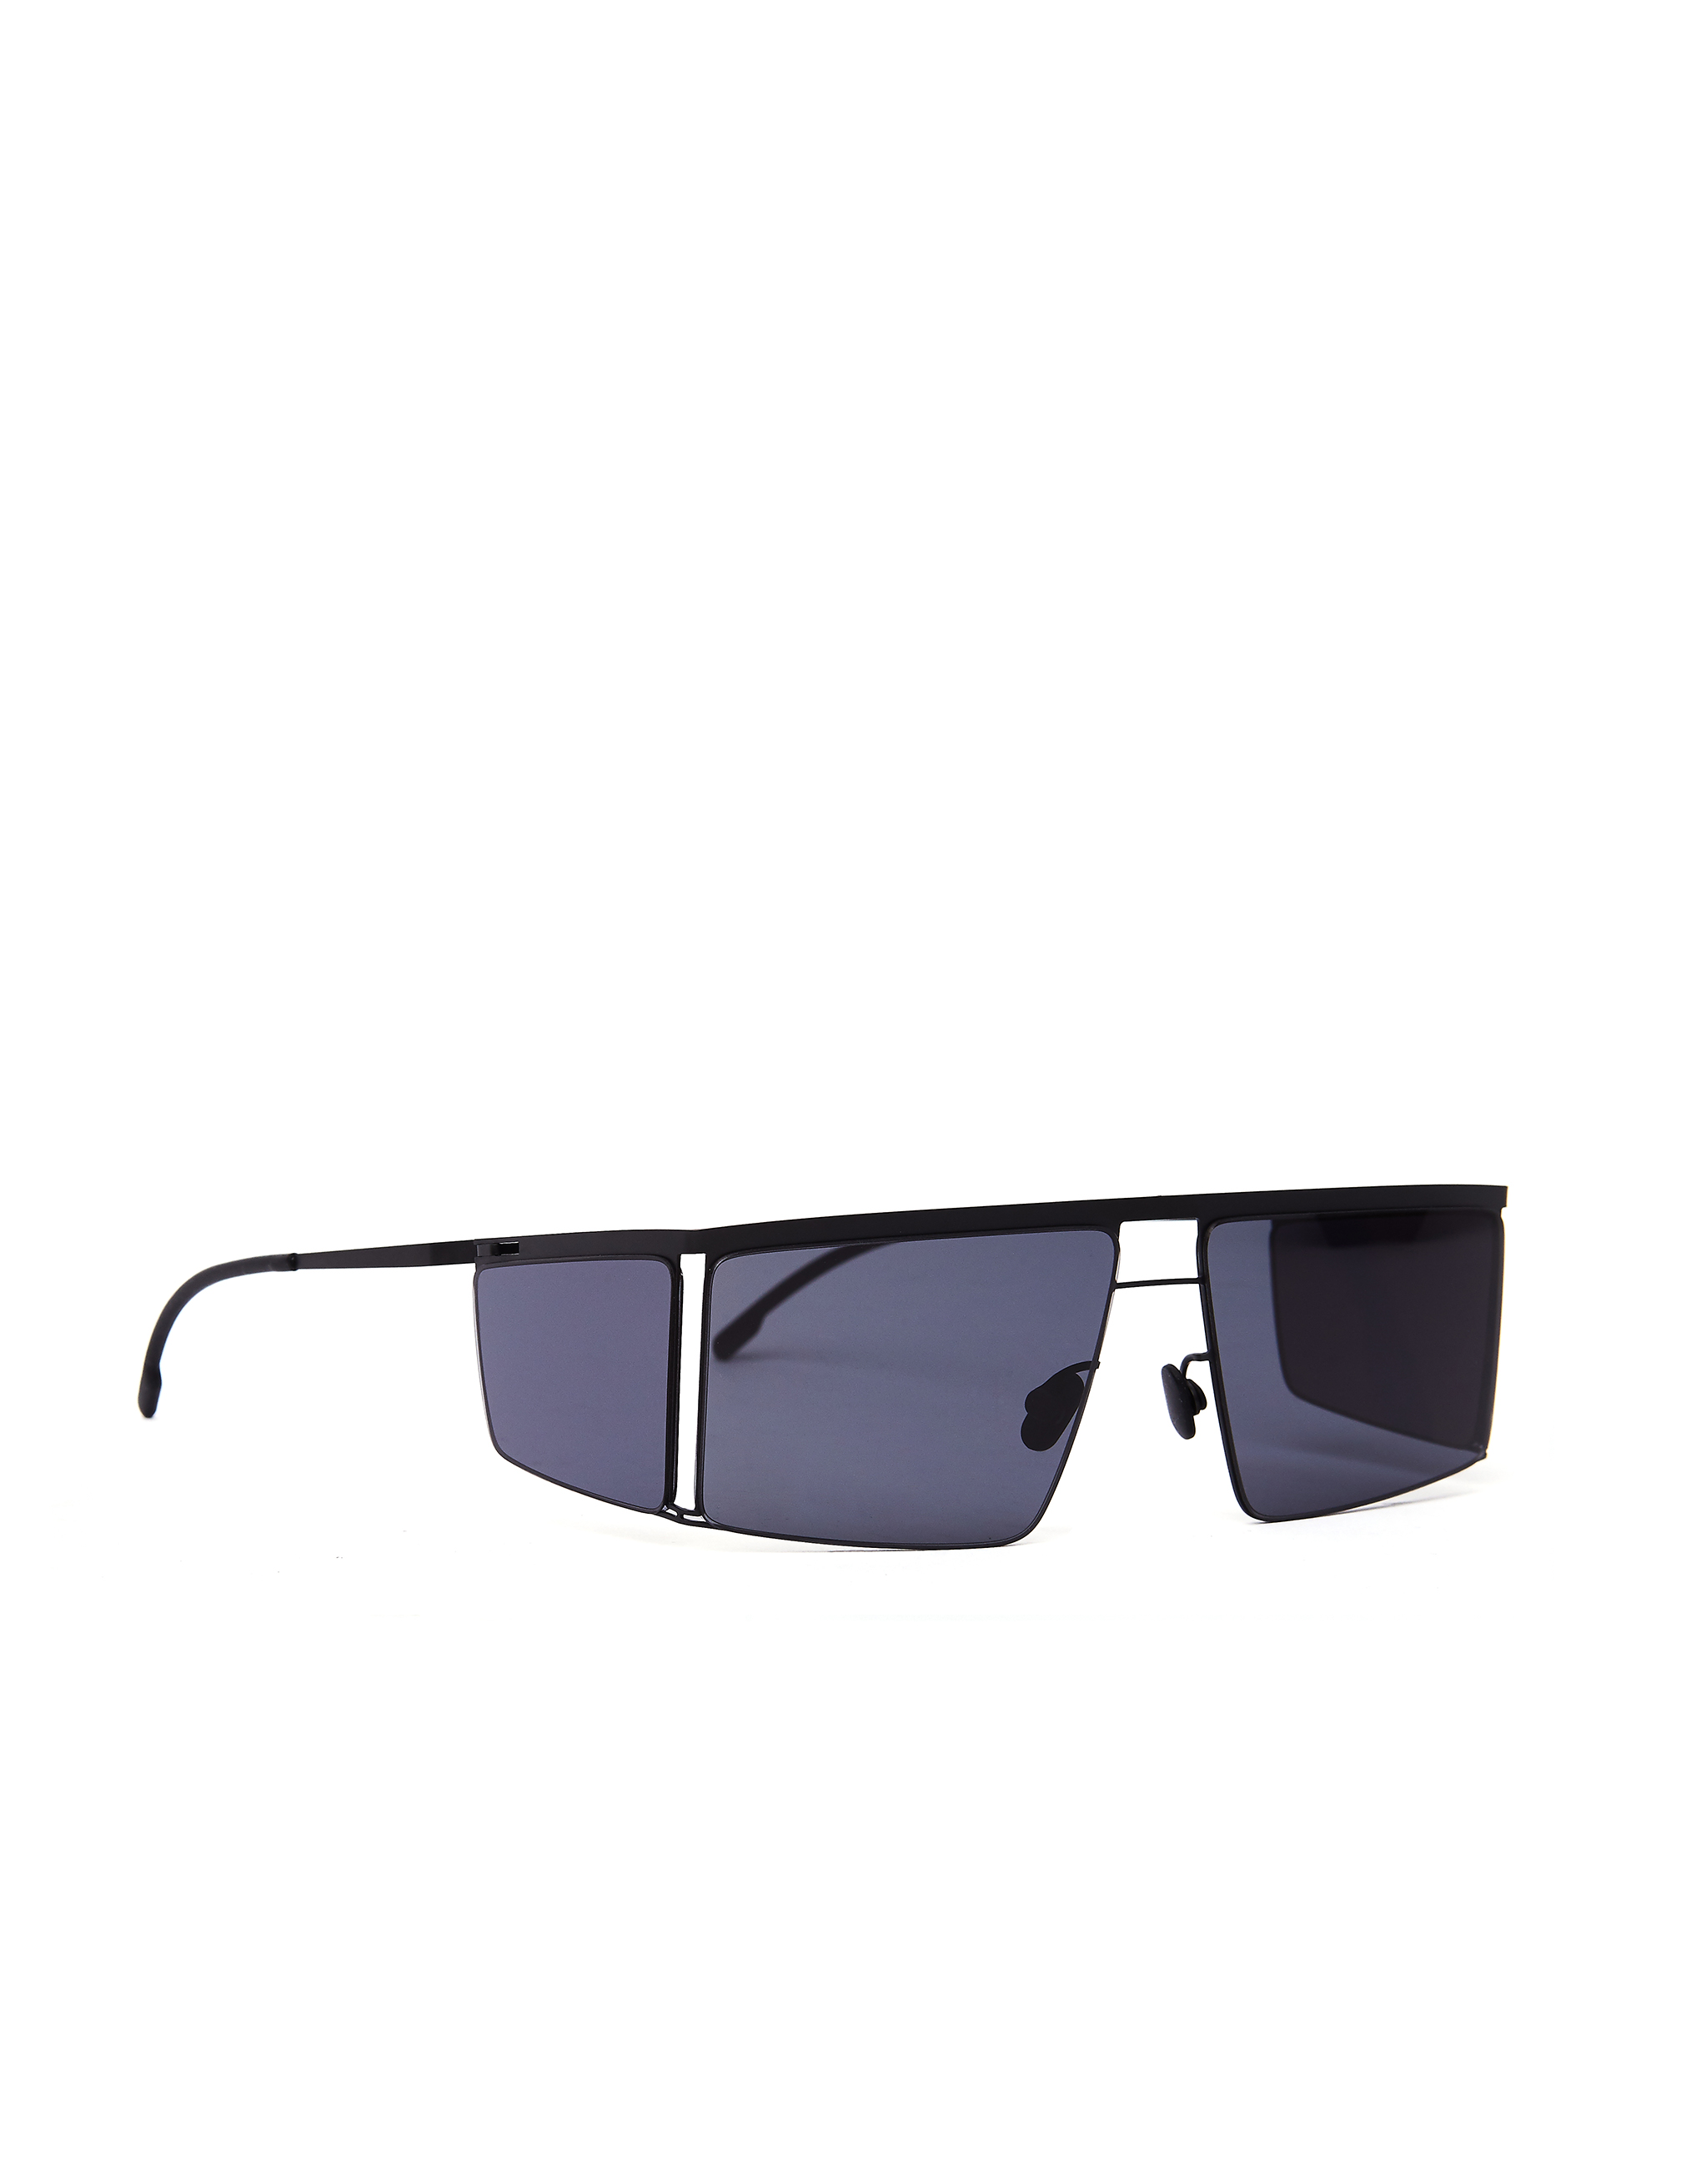 Черные очки Mykita & Helmut Lang Mykita HL001/darkgrey, размер One Size